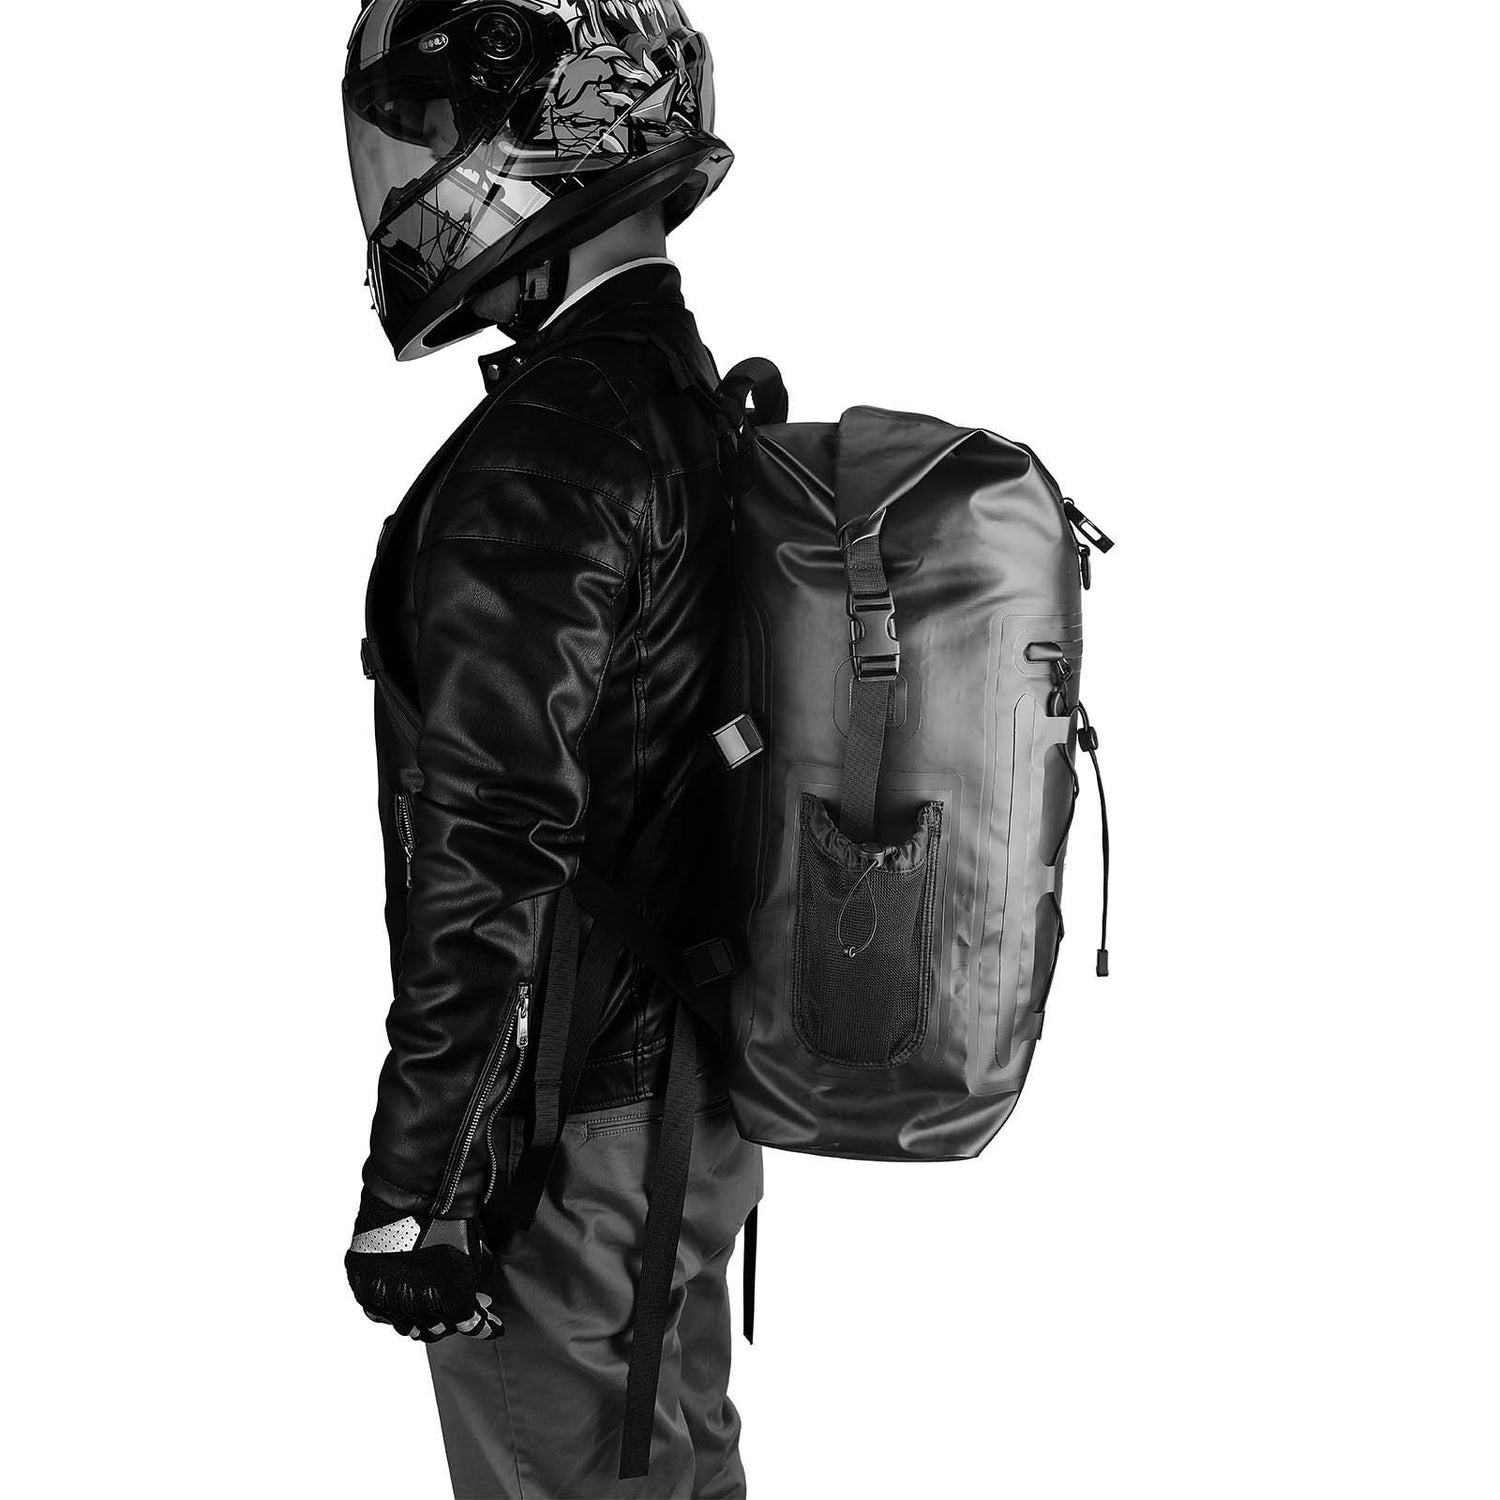 Mochila/Bolsa para casco impermeable - Negra y blanca a rayas - 59,90€ –